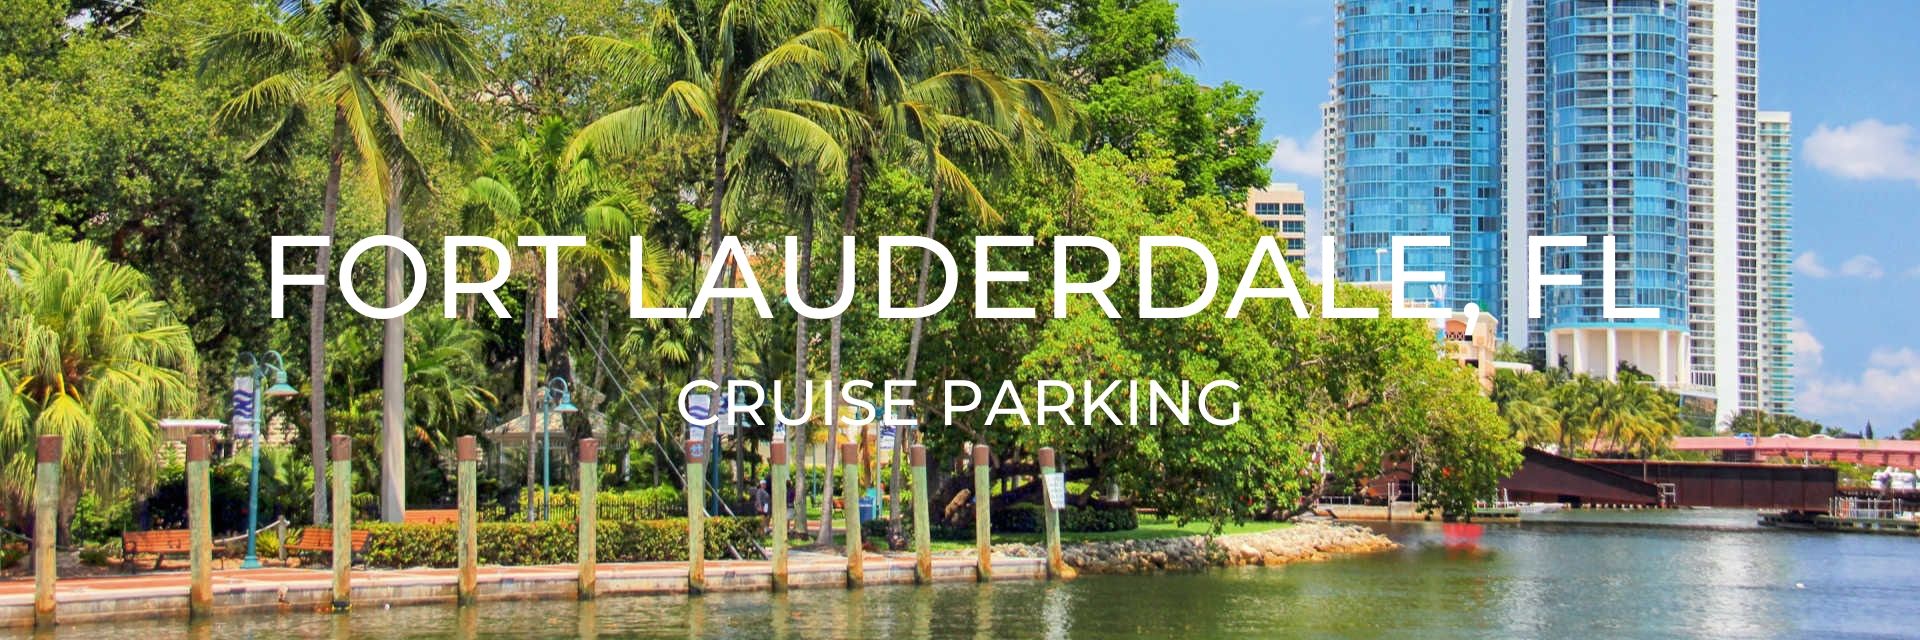 cruise parking fort lauderdale florida